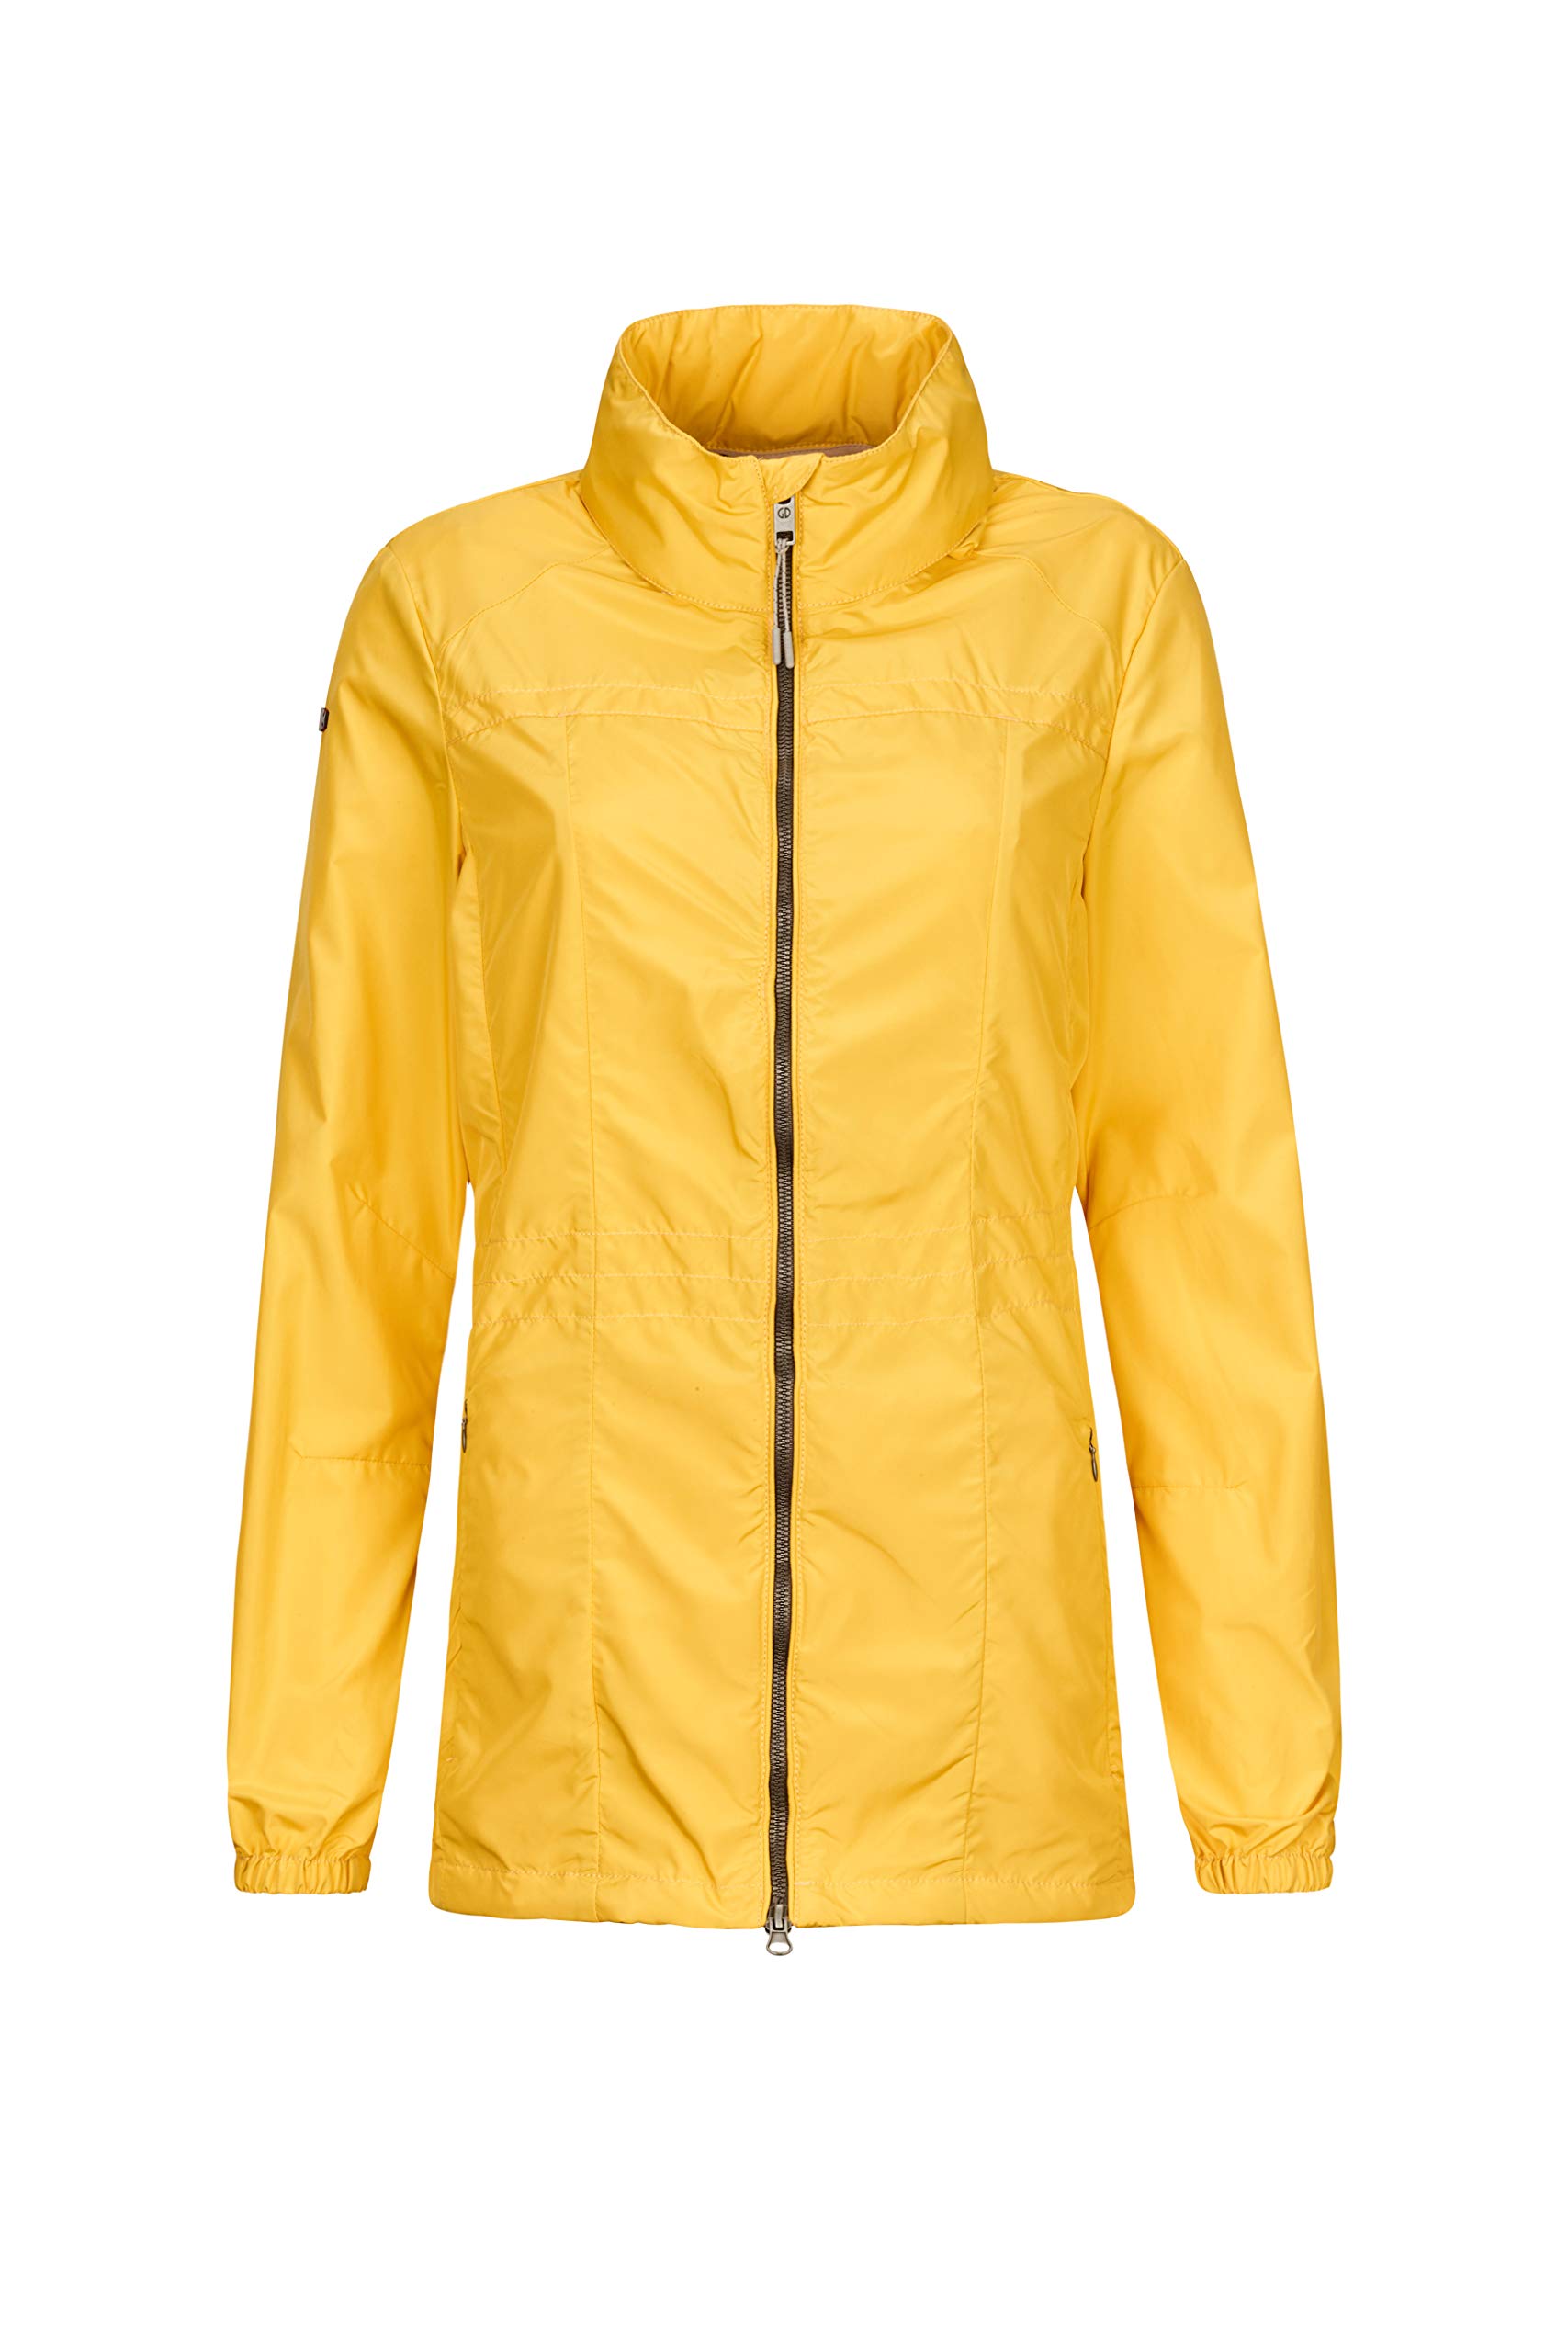 G.I.G.A. DX Damen Jacke Erenka - Übergangsjacke mit einrollbarer Kapuze - leichte Damenjacke, hellgelb, 46